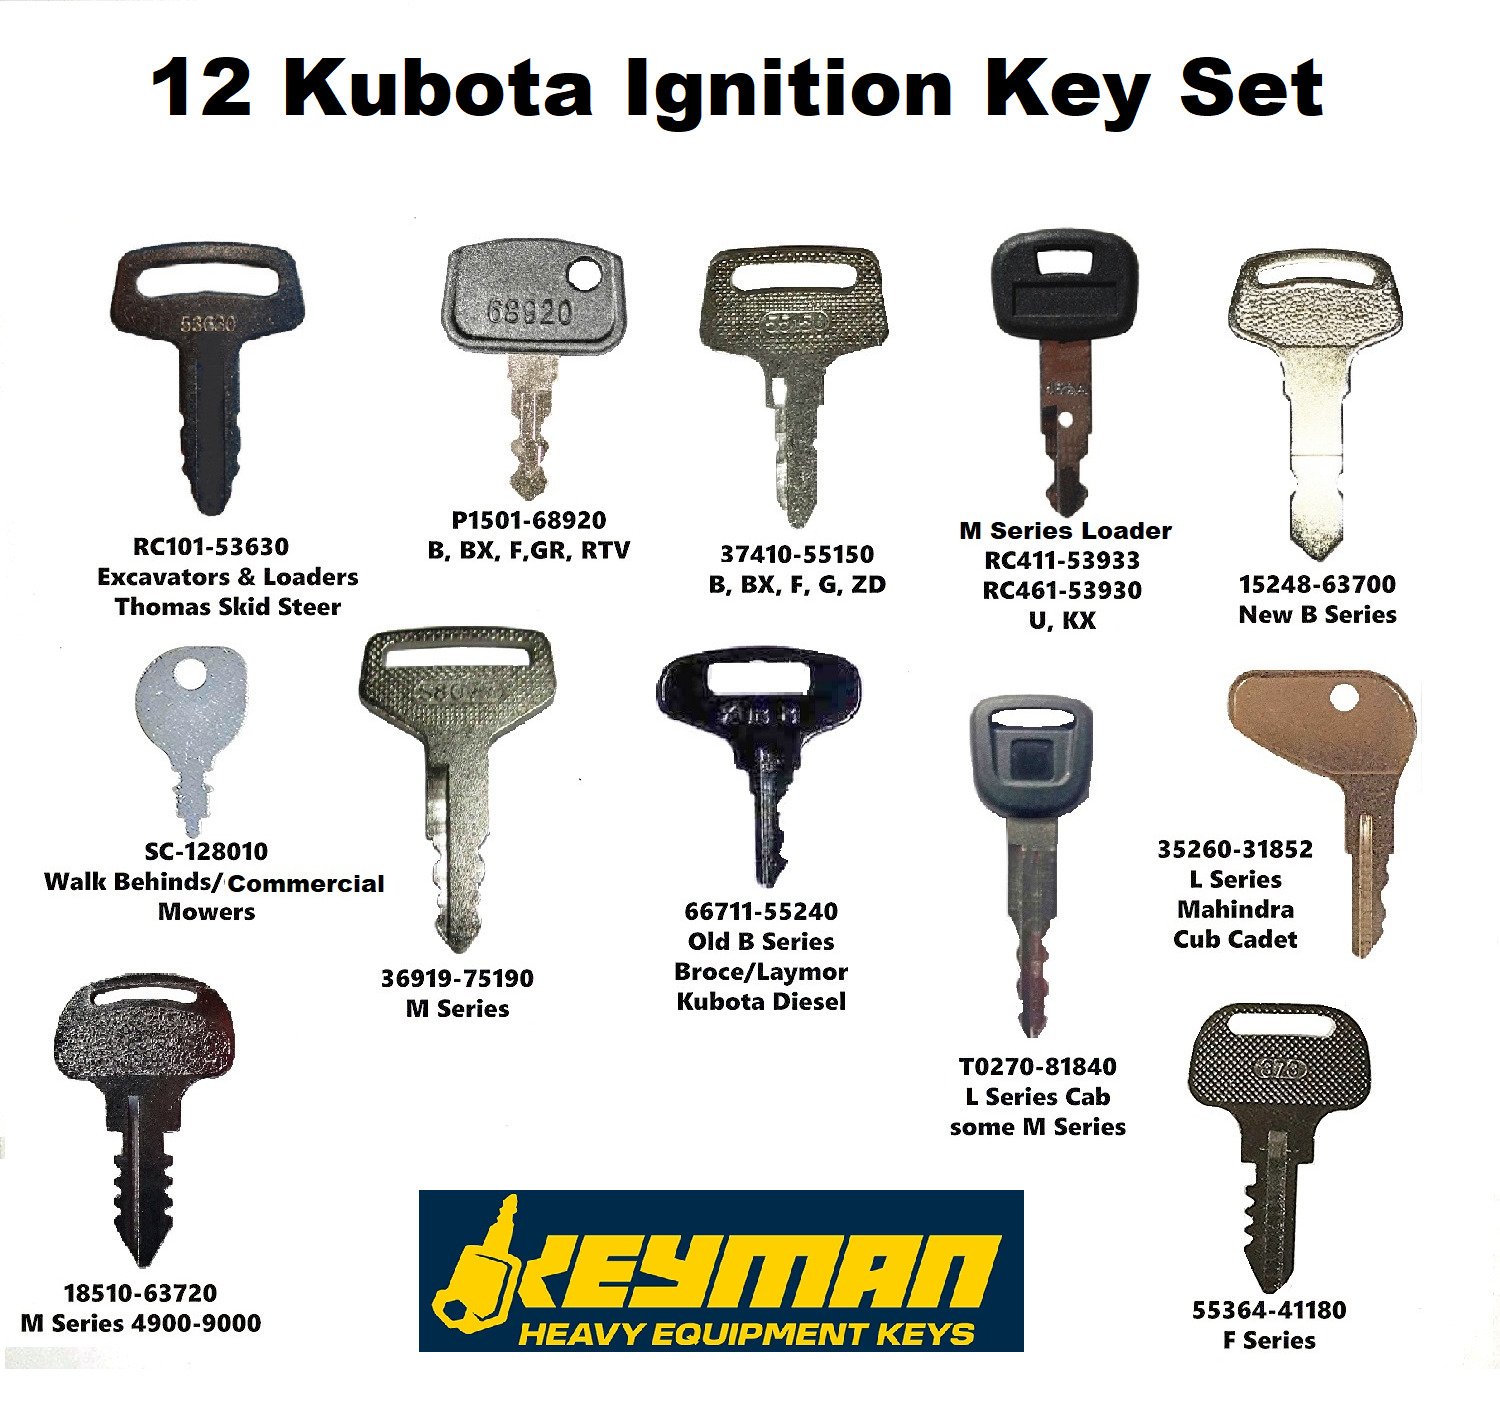 12 Kubota Heavy Equipment & Tractor Ignition Keys Set fits many models